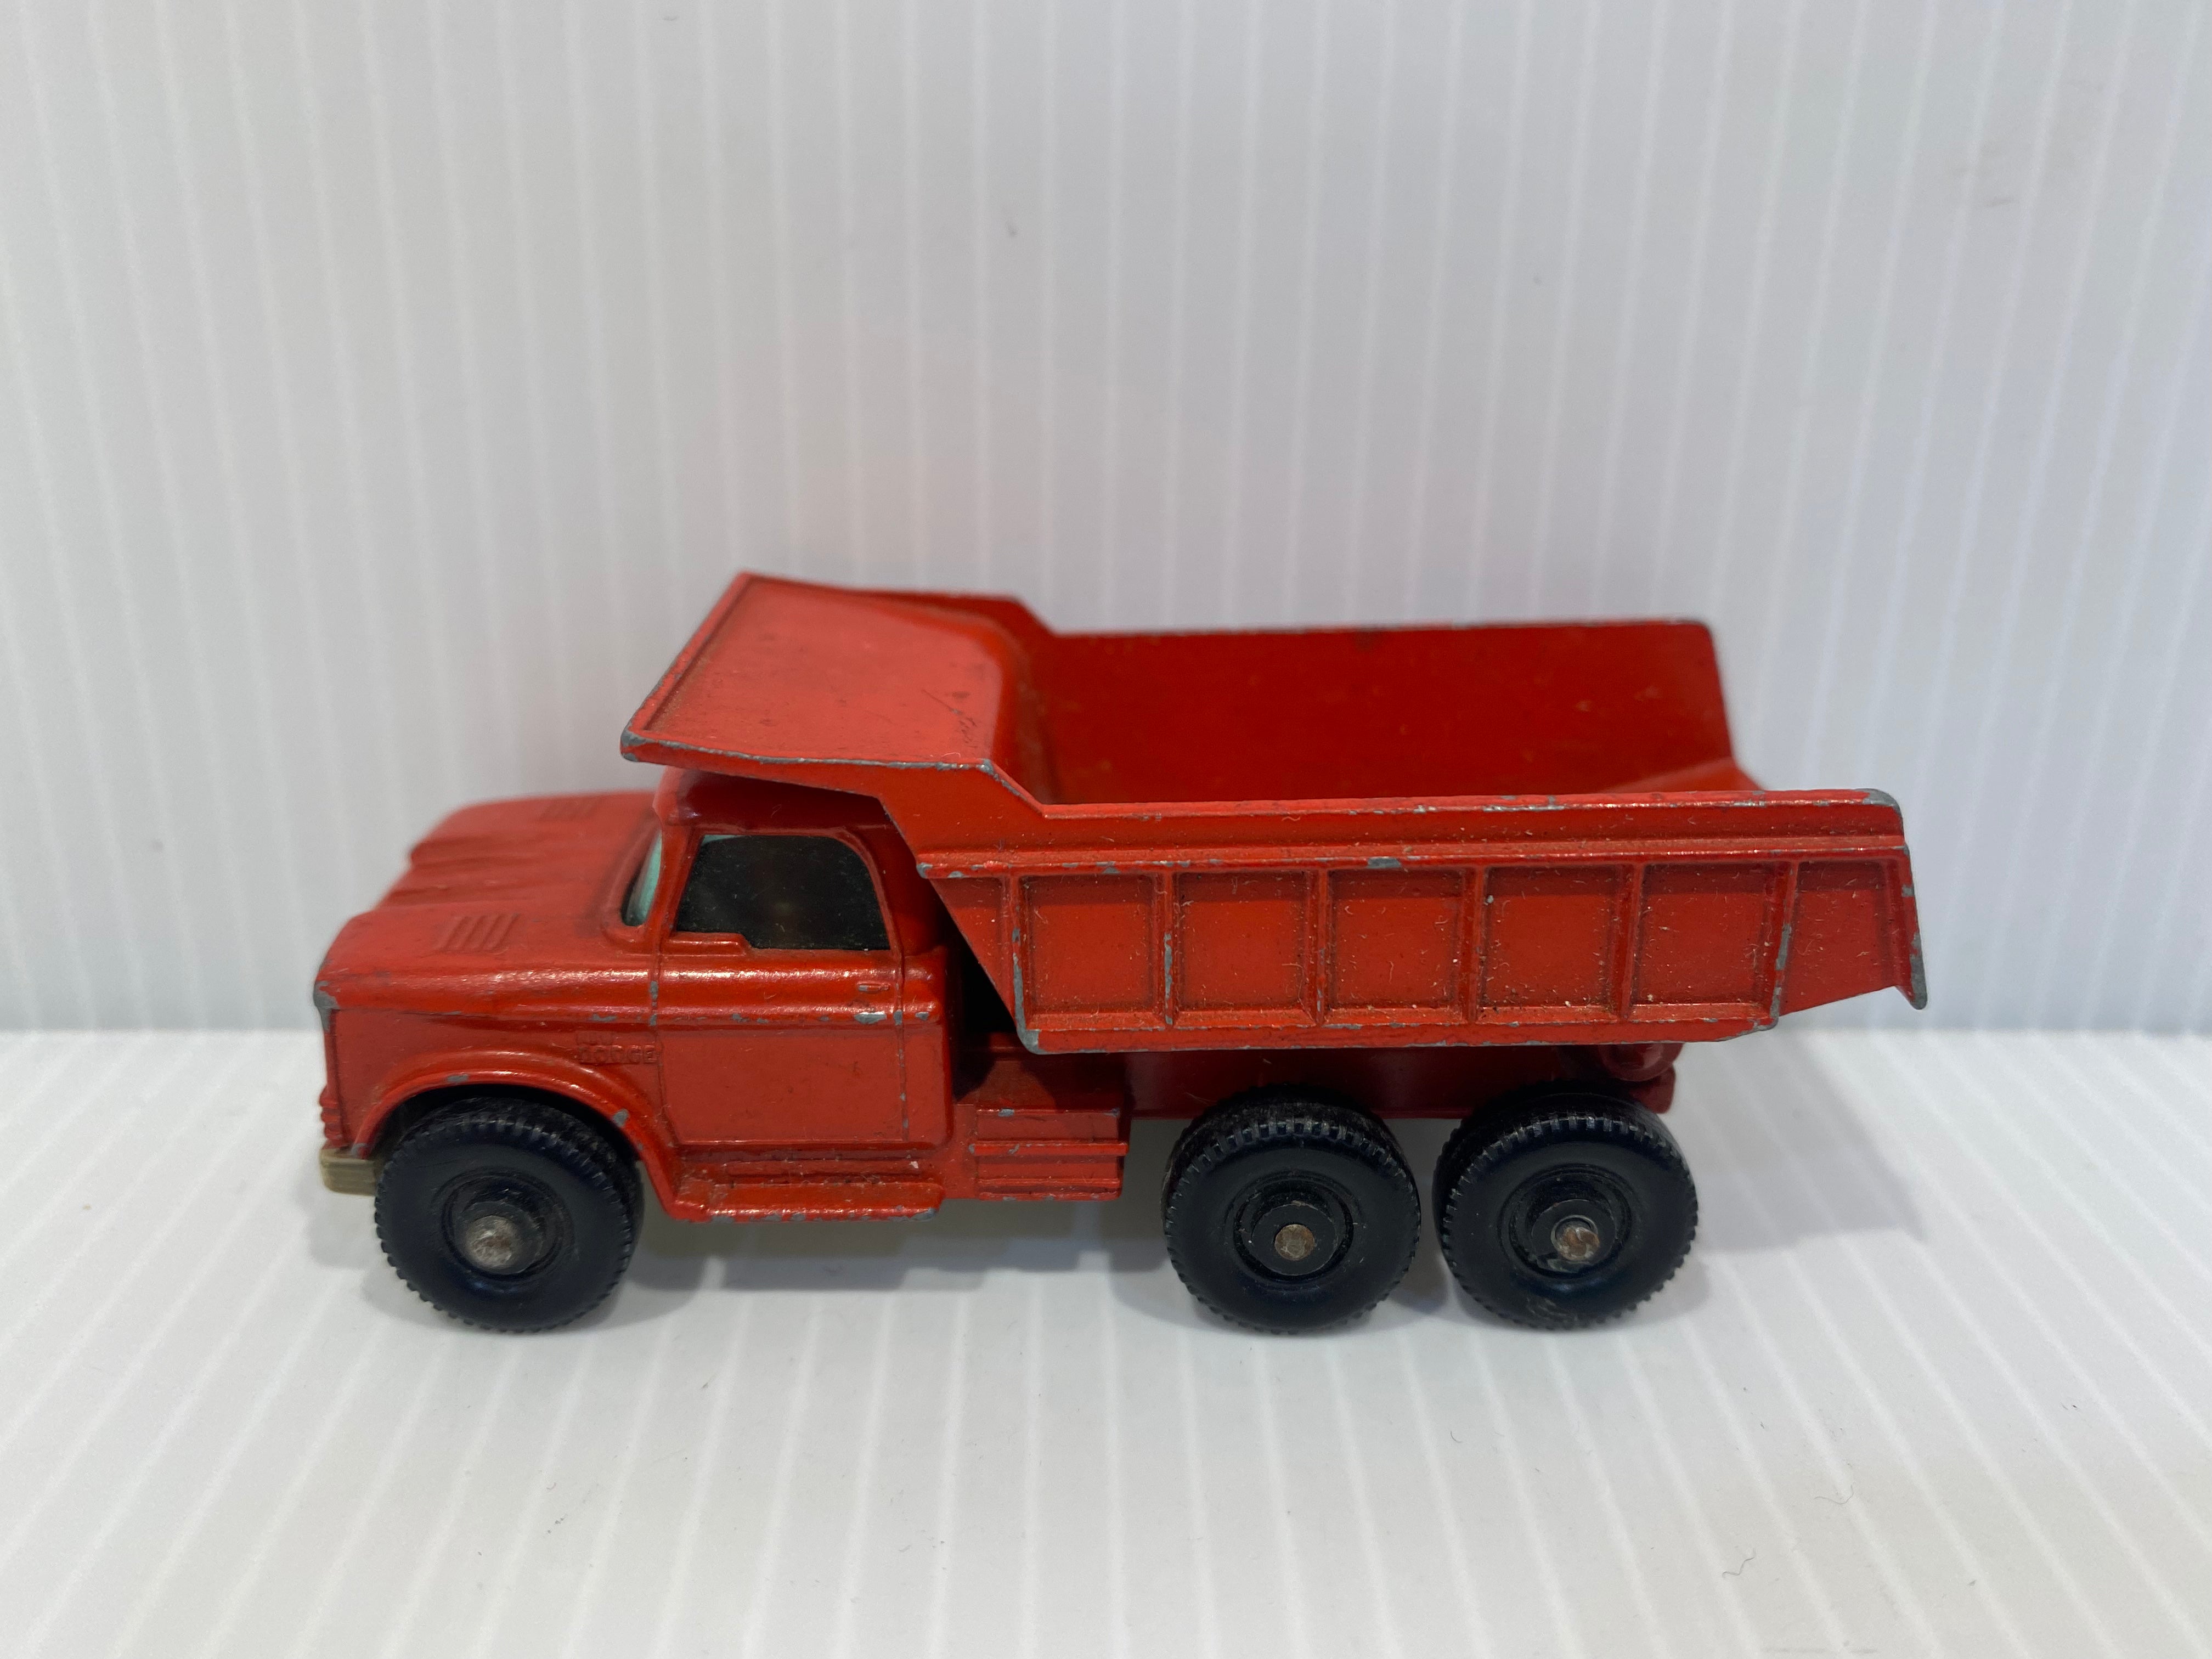 Matchbox Dodge dumper truck with original box